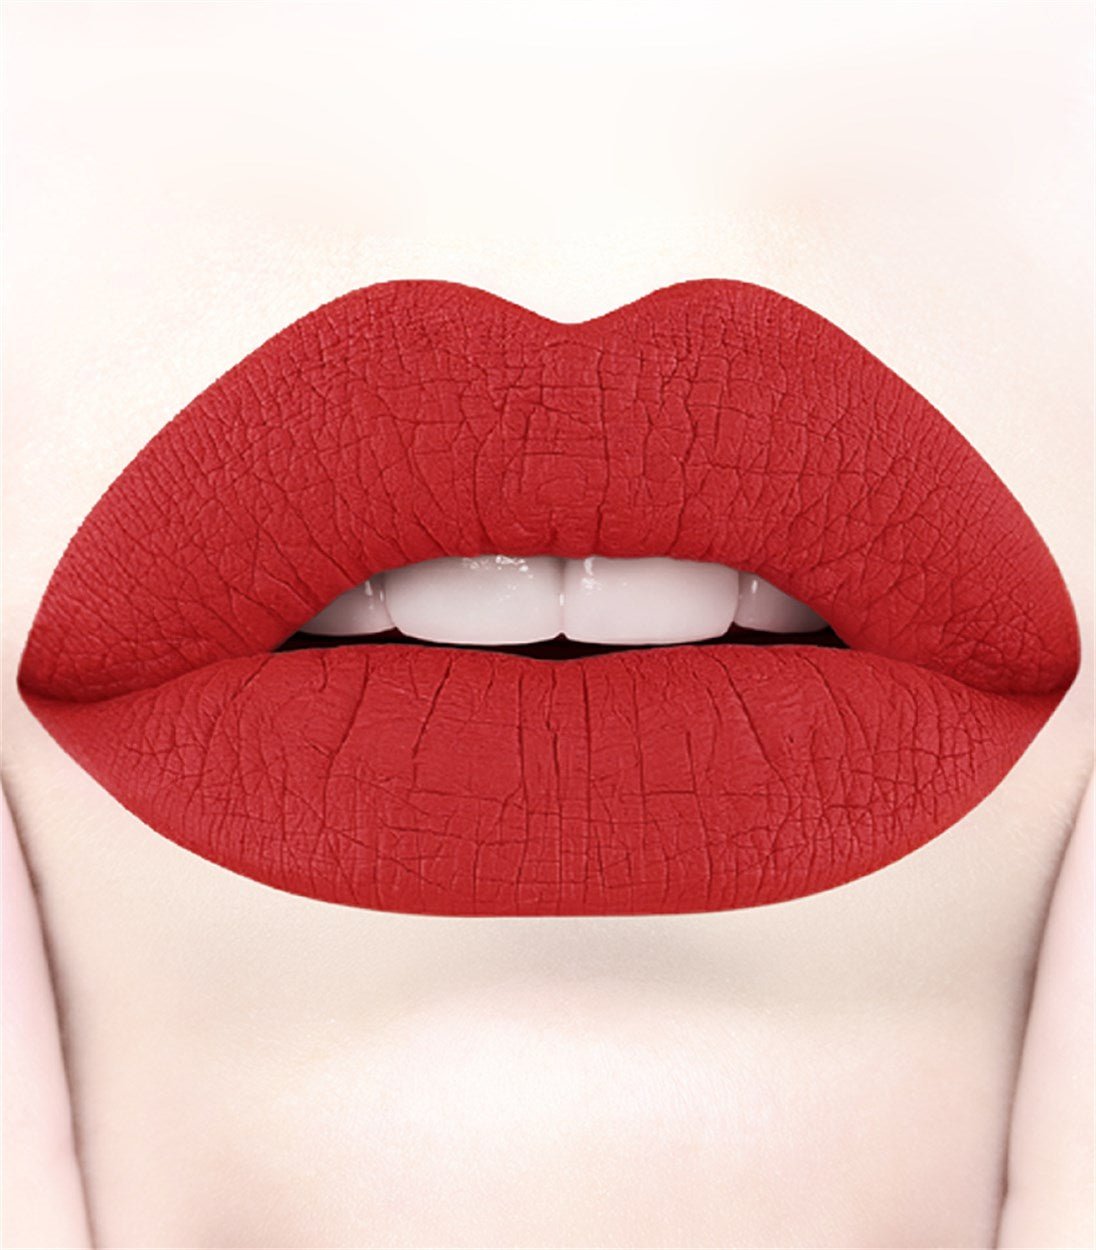 Pastel Daylong Lip Gloss - 19 - AllurebeautypkPastel Daylong Lip Gloss - 19